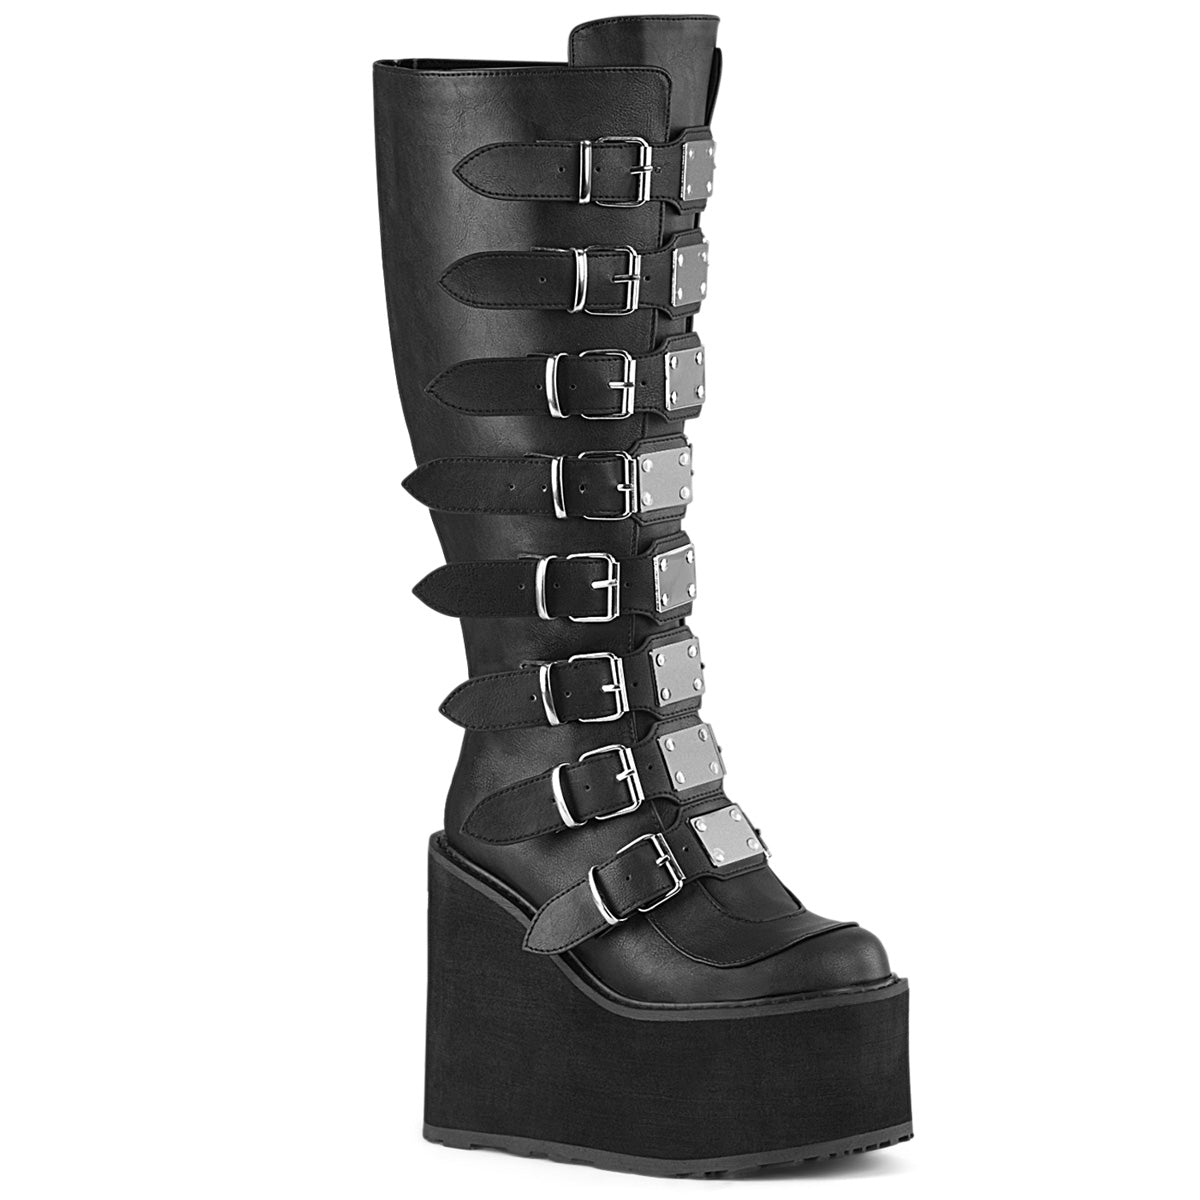 SWING-815WC Alternative Footwear Demonia Women's Mid-Calf & Knee High Boots Blk Vegan Leather